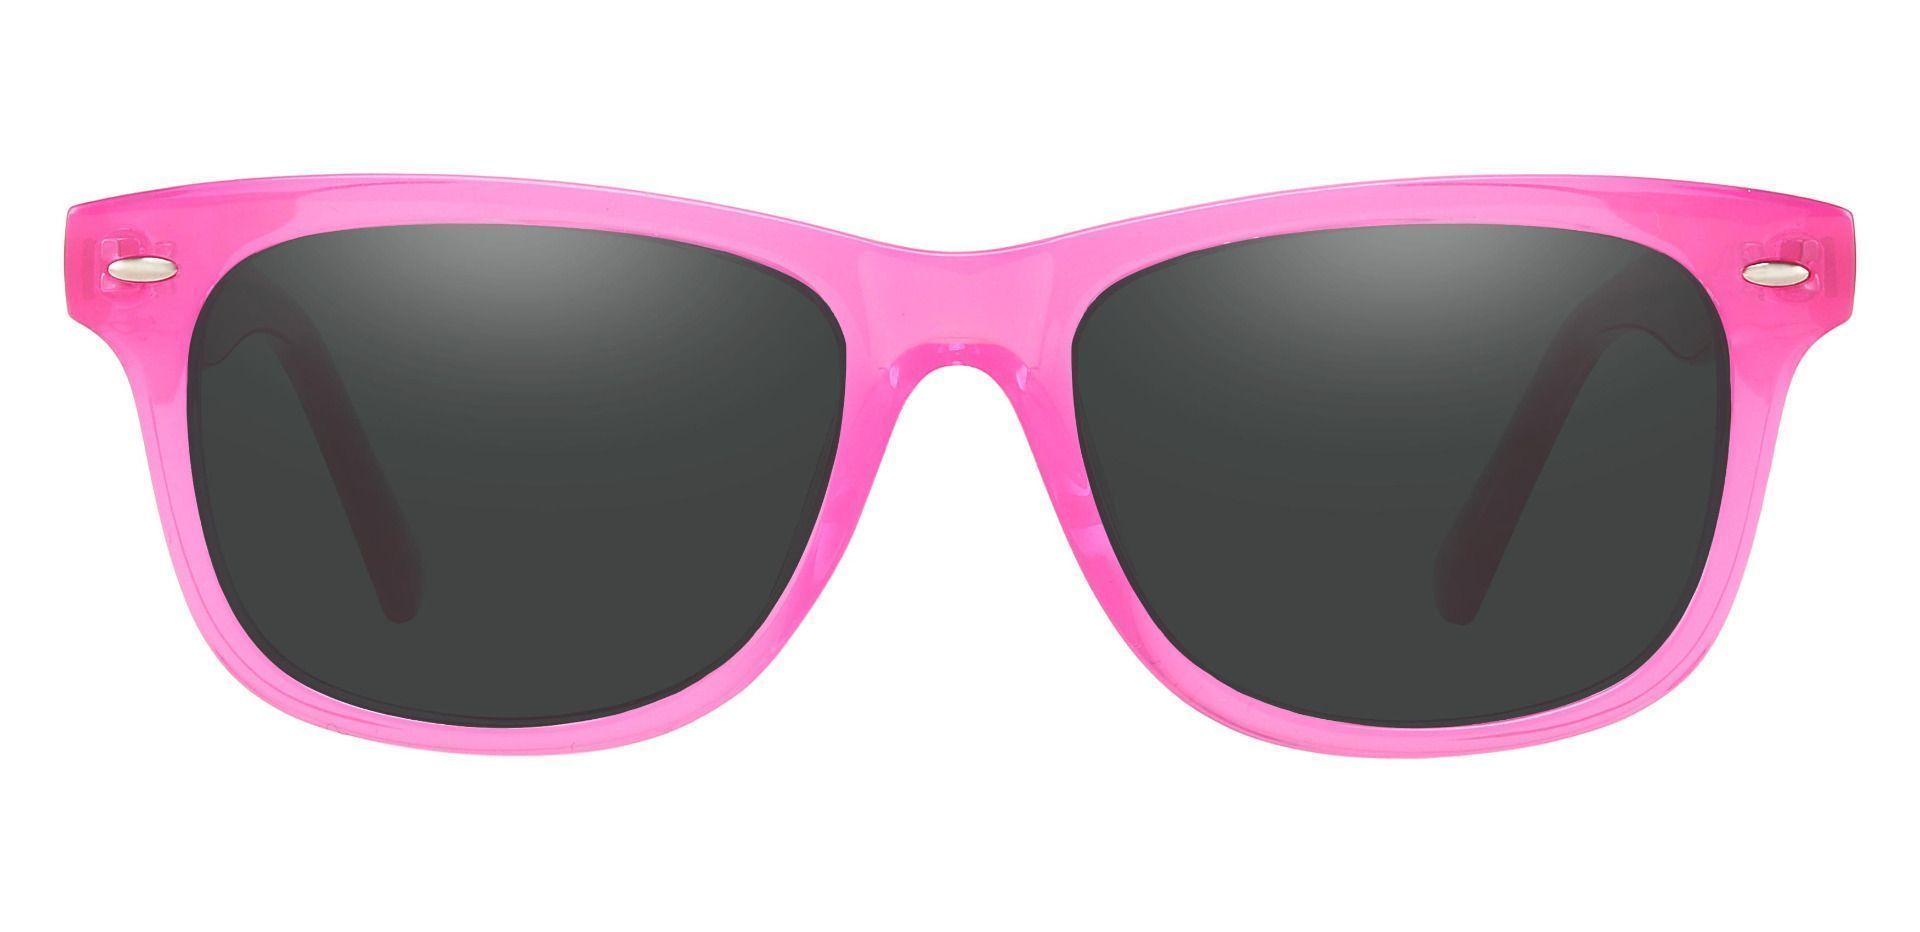 Eureka Square Prescription Sunglasses - Pink Frame With Gray Lenses